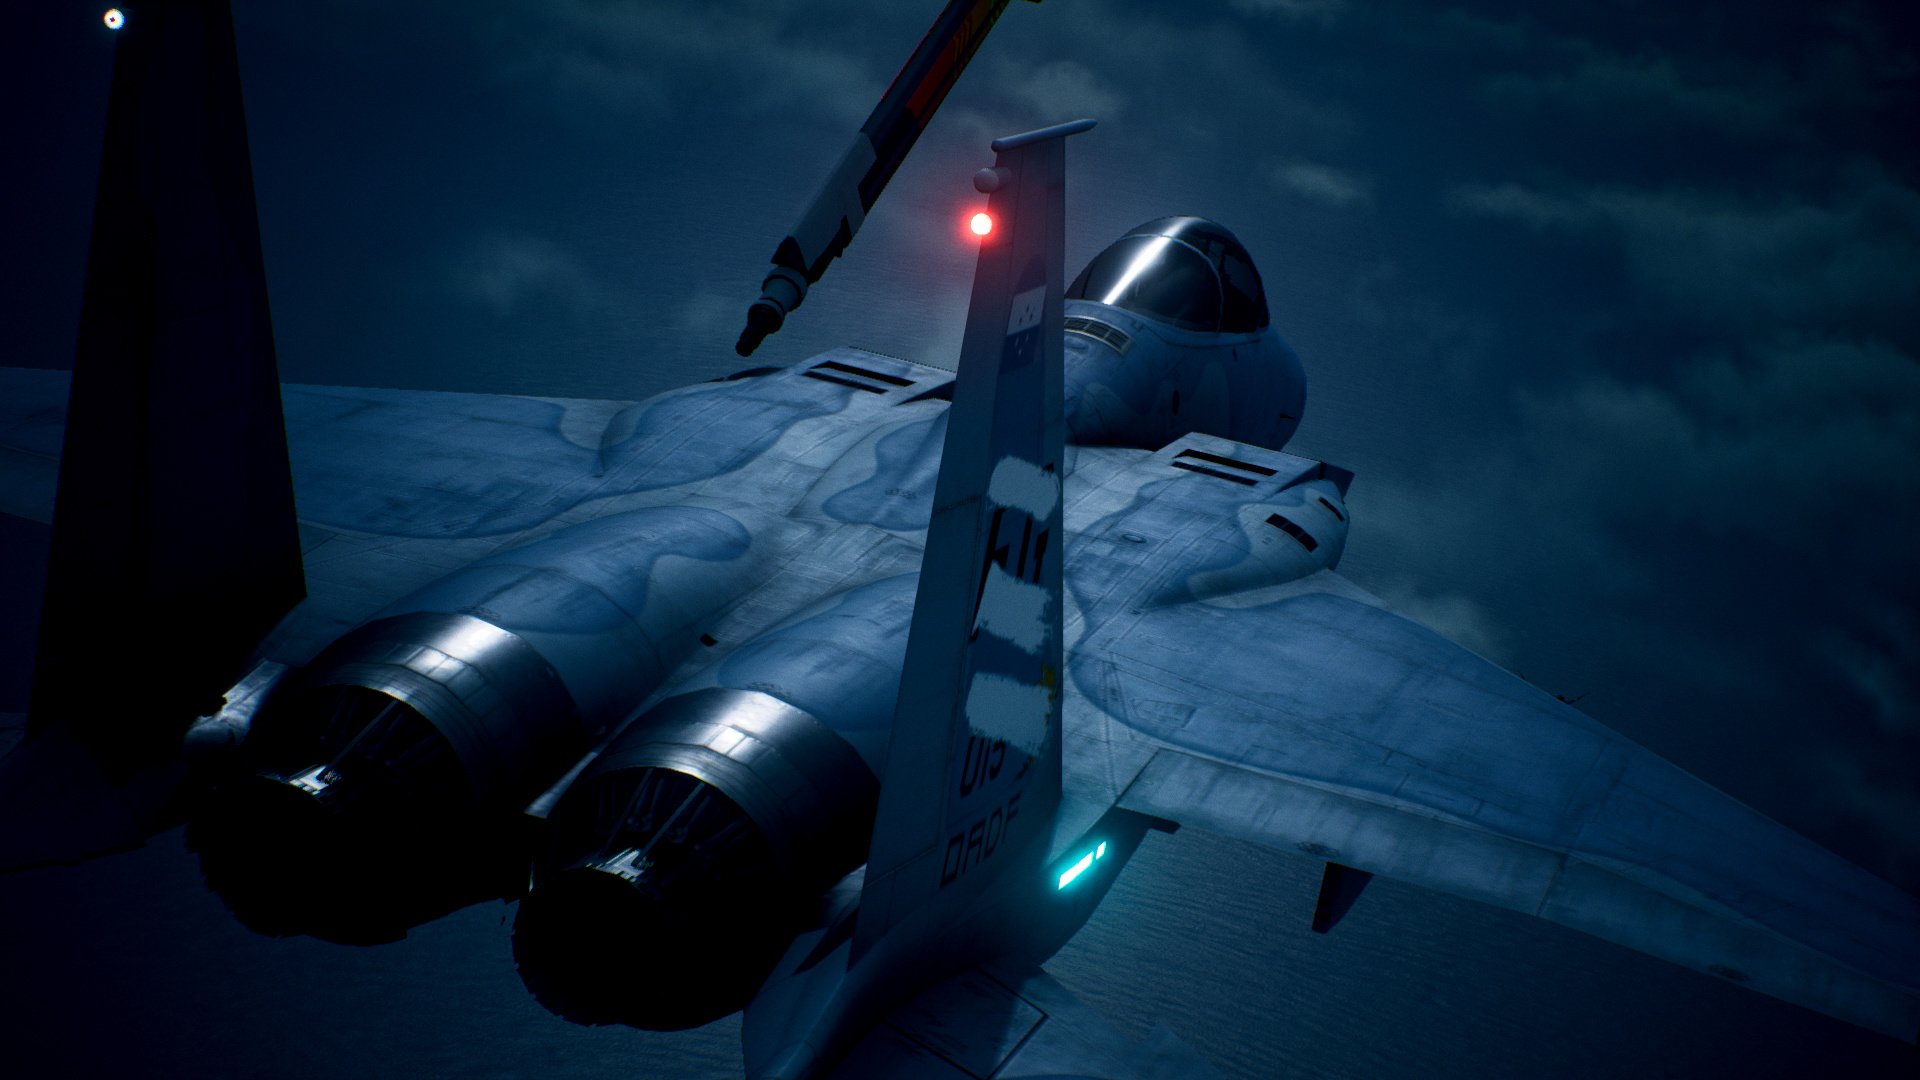 Microsoft Flight Simulator and Ace Combat 7 Have Top Gun: Maverick